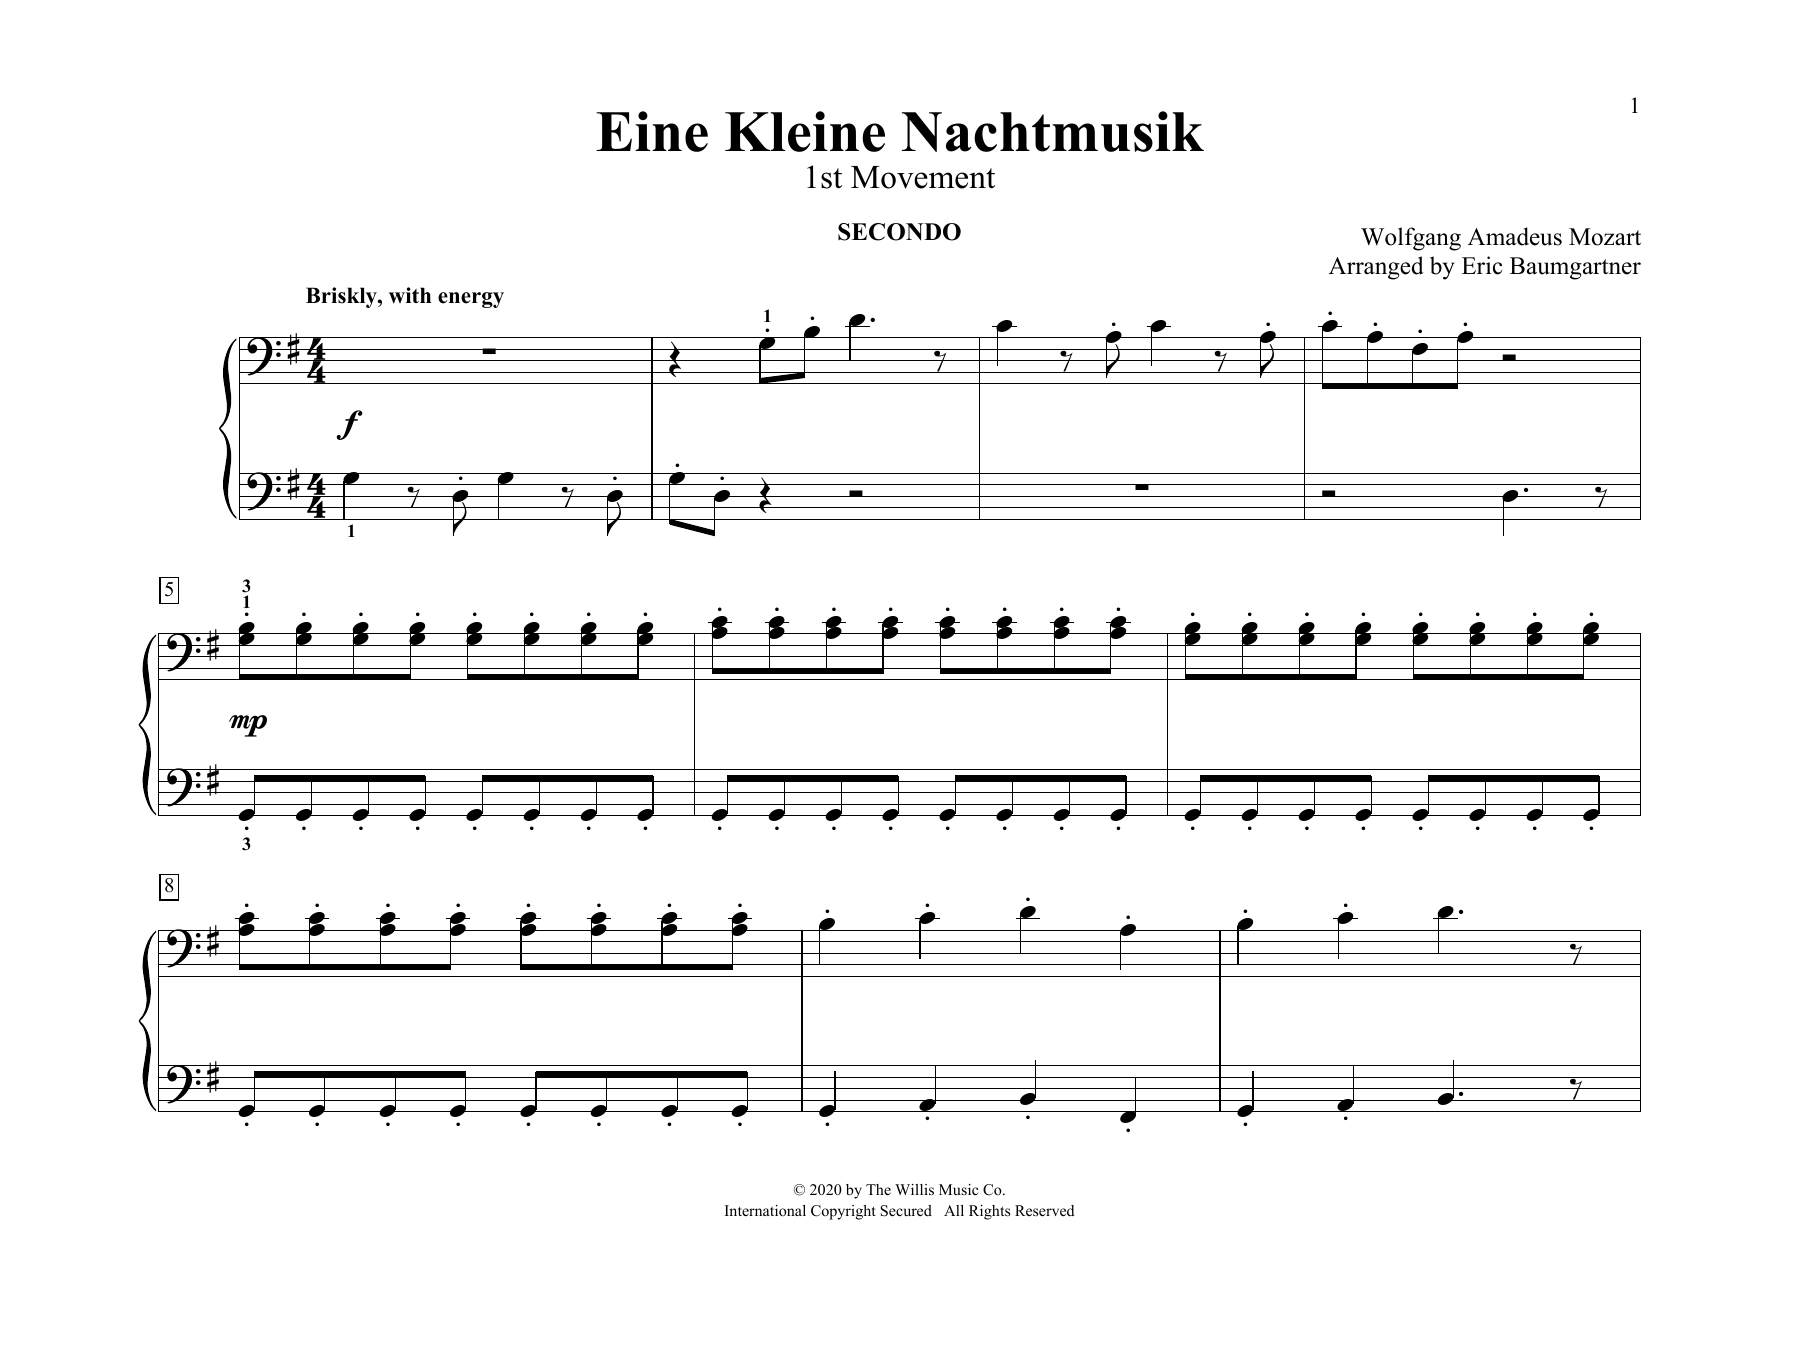 Wolfgang Amadeus Mozart Eine Kleine Nachtmusik (1st Movement) (arr. Eric Baumgartner) Sheet Music Notes & Chords for Piano Duet - Download or Print PDF